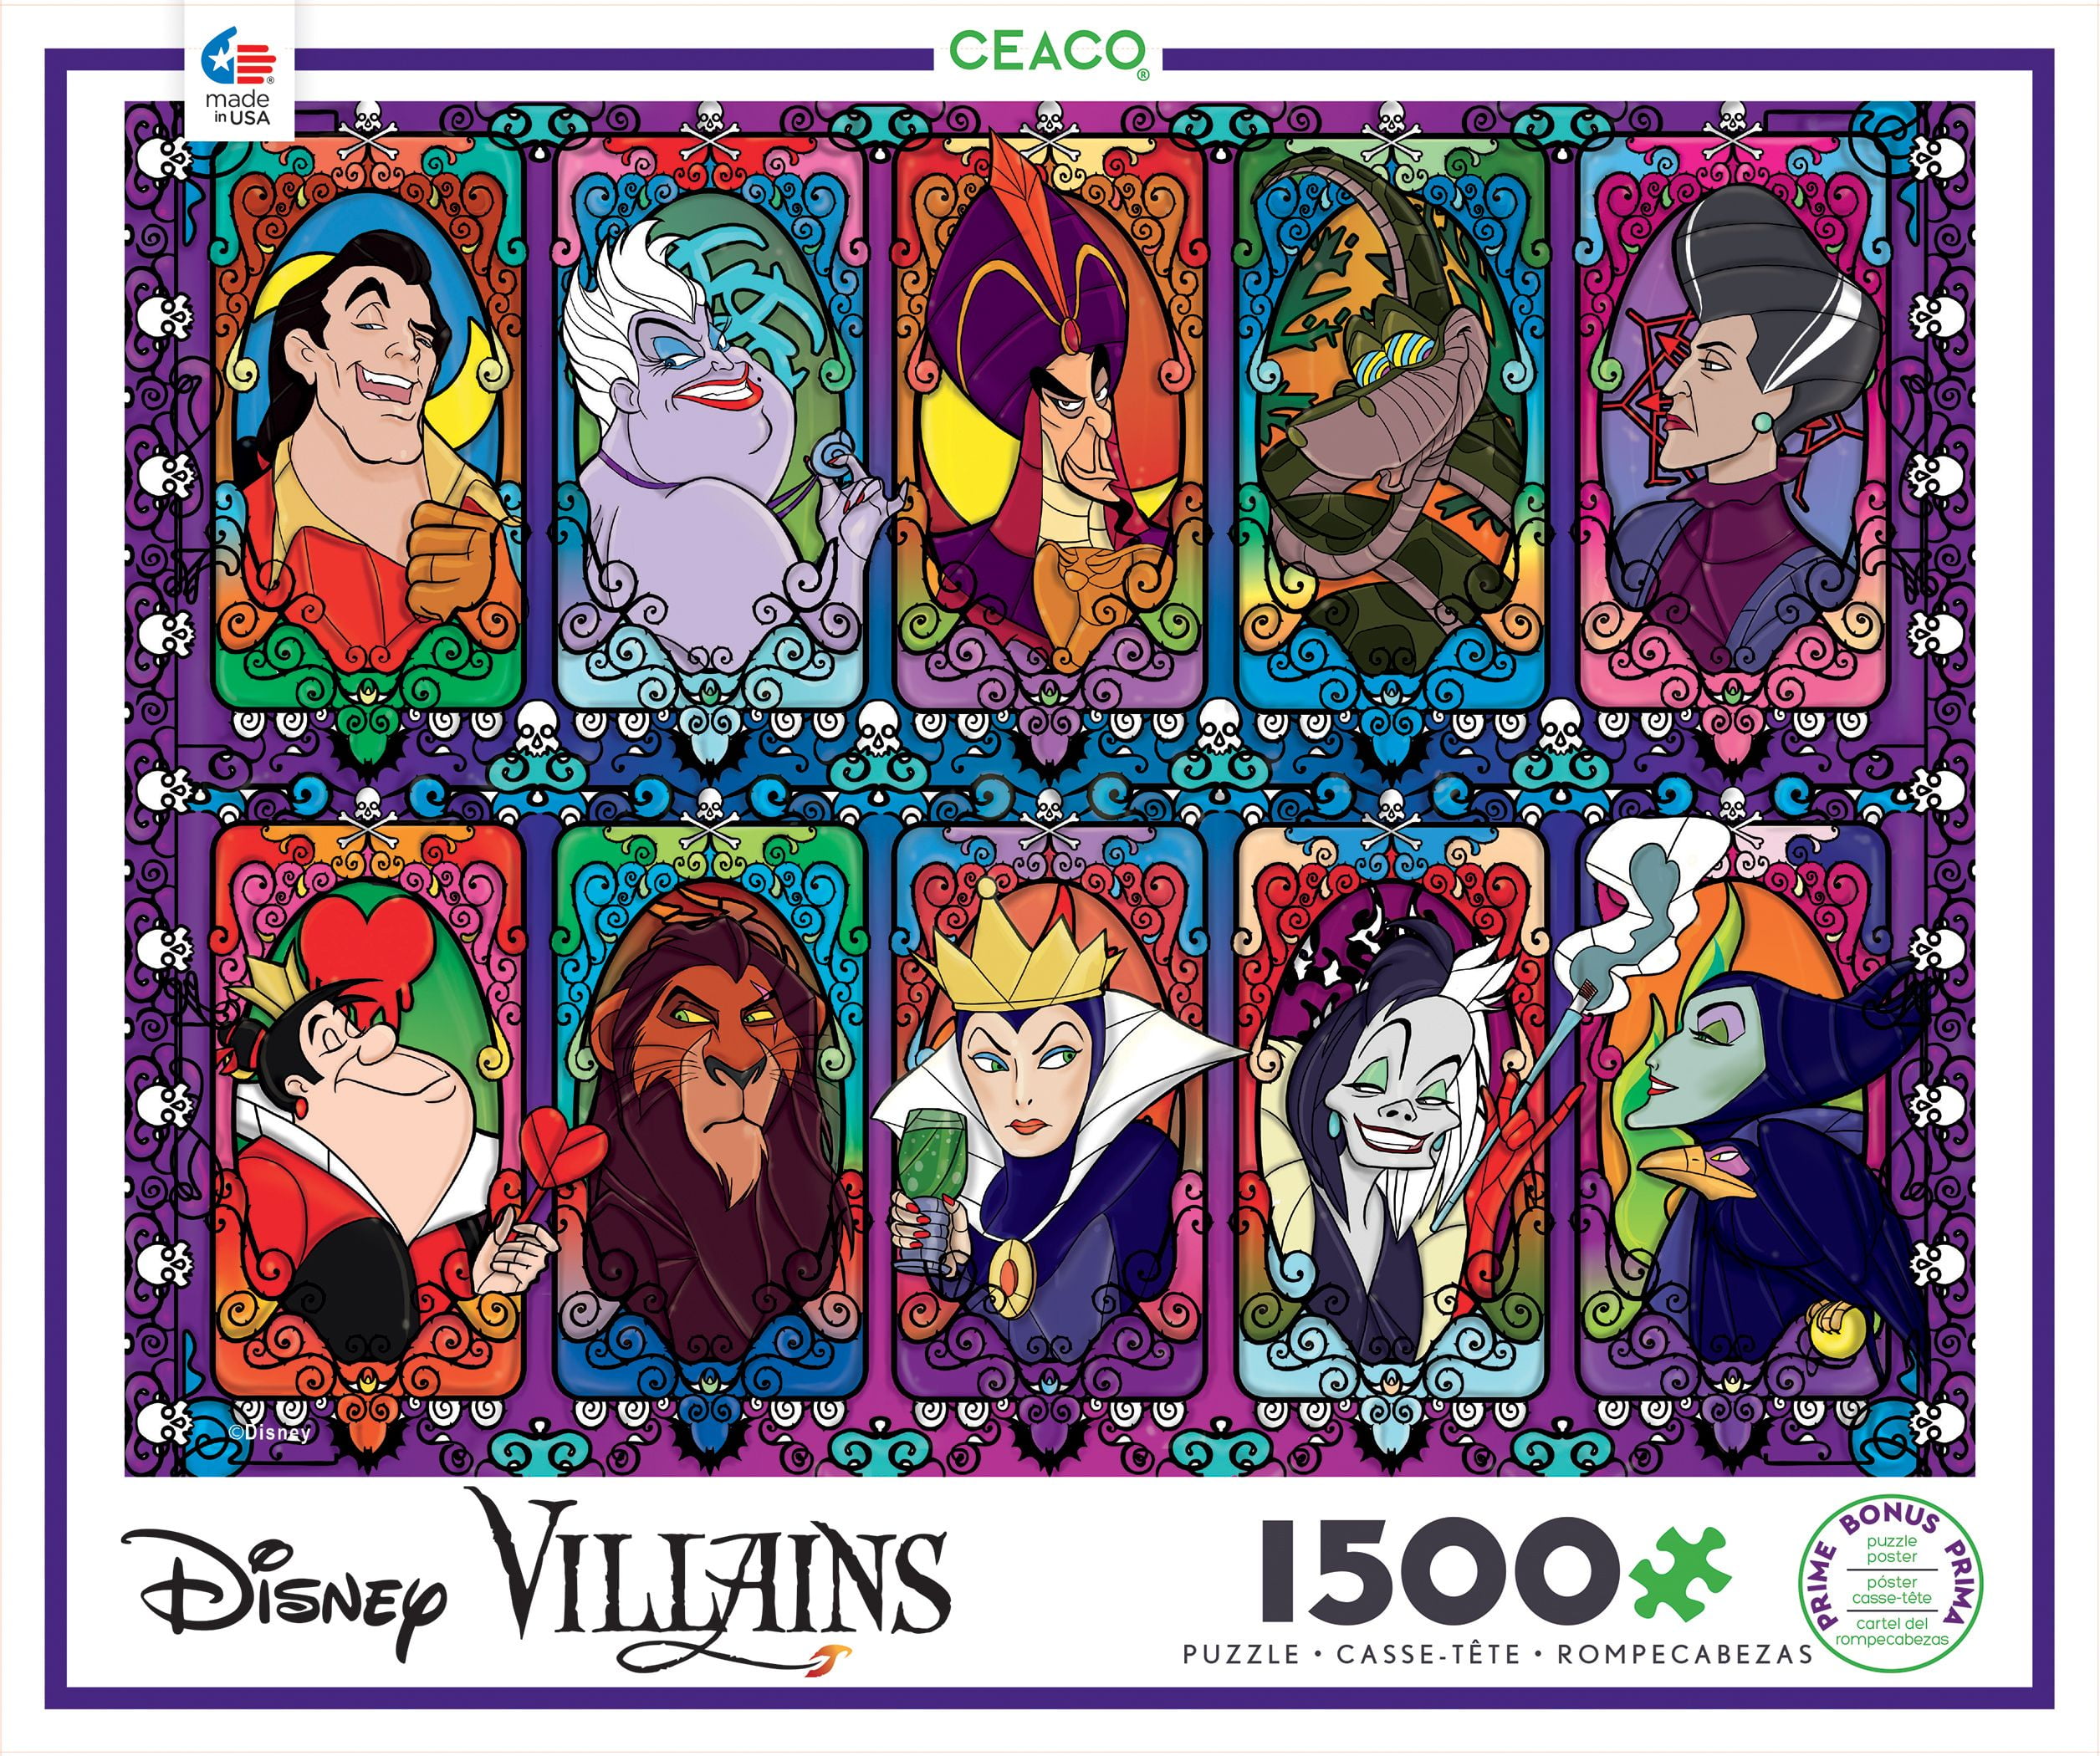 Ceaco - Disney Friends - Flower Power Stitch - 200 Piece Interlocking Jigsaw  Puzzle 